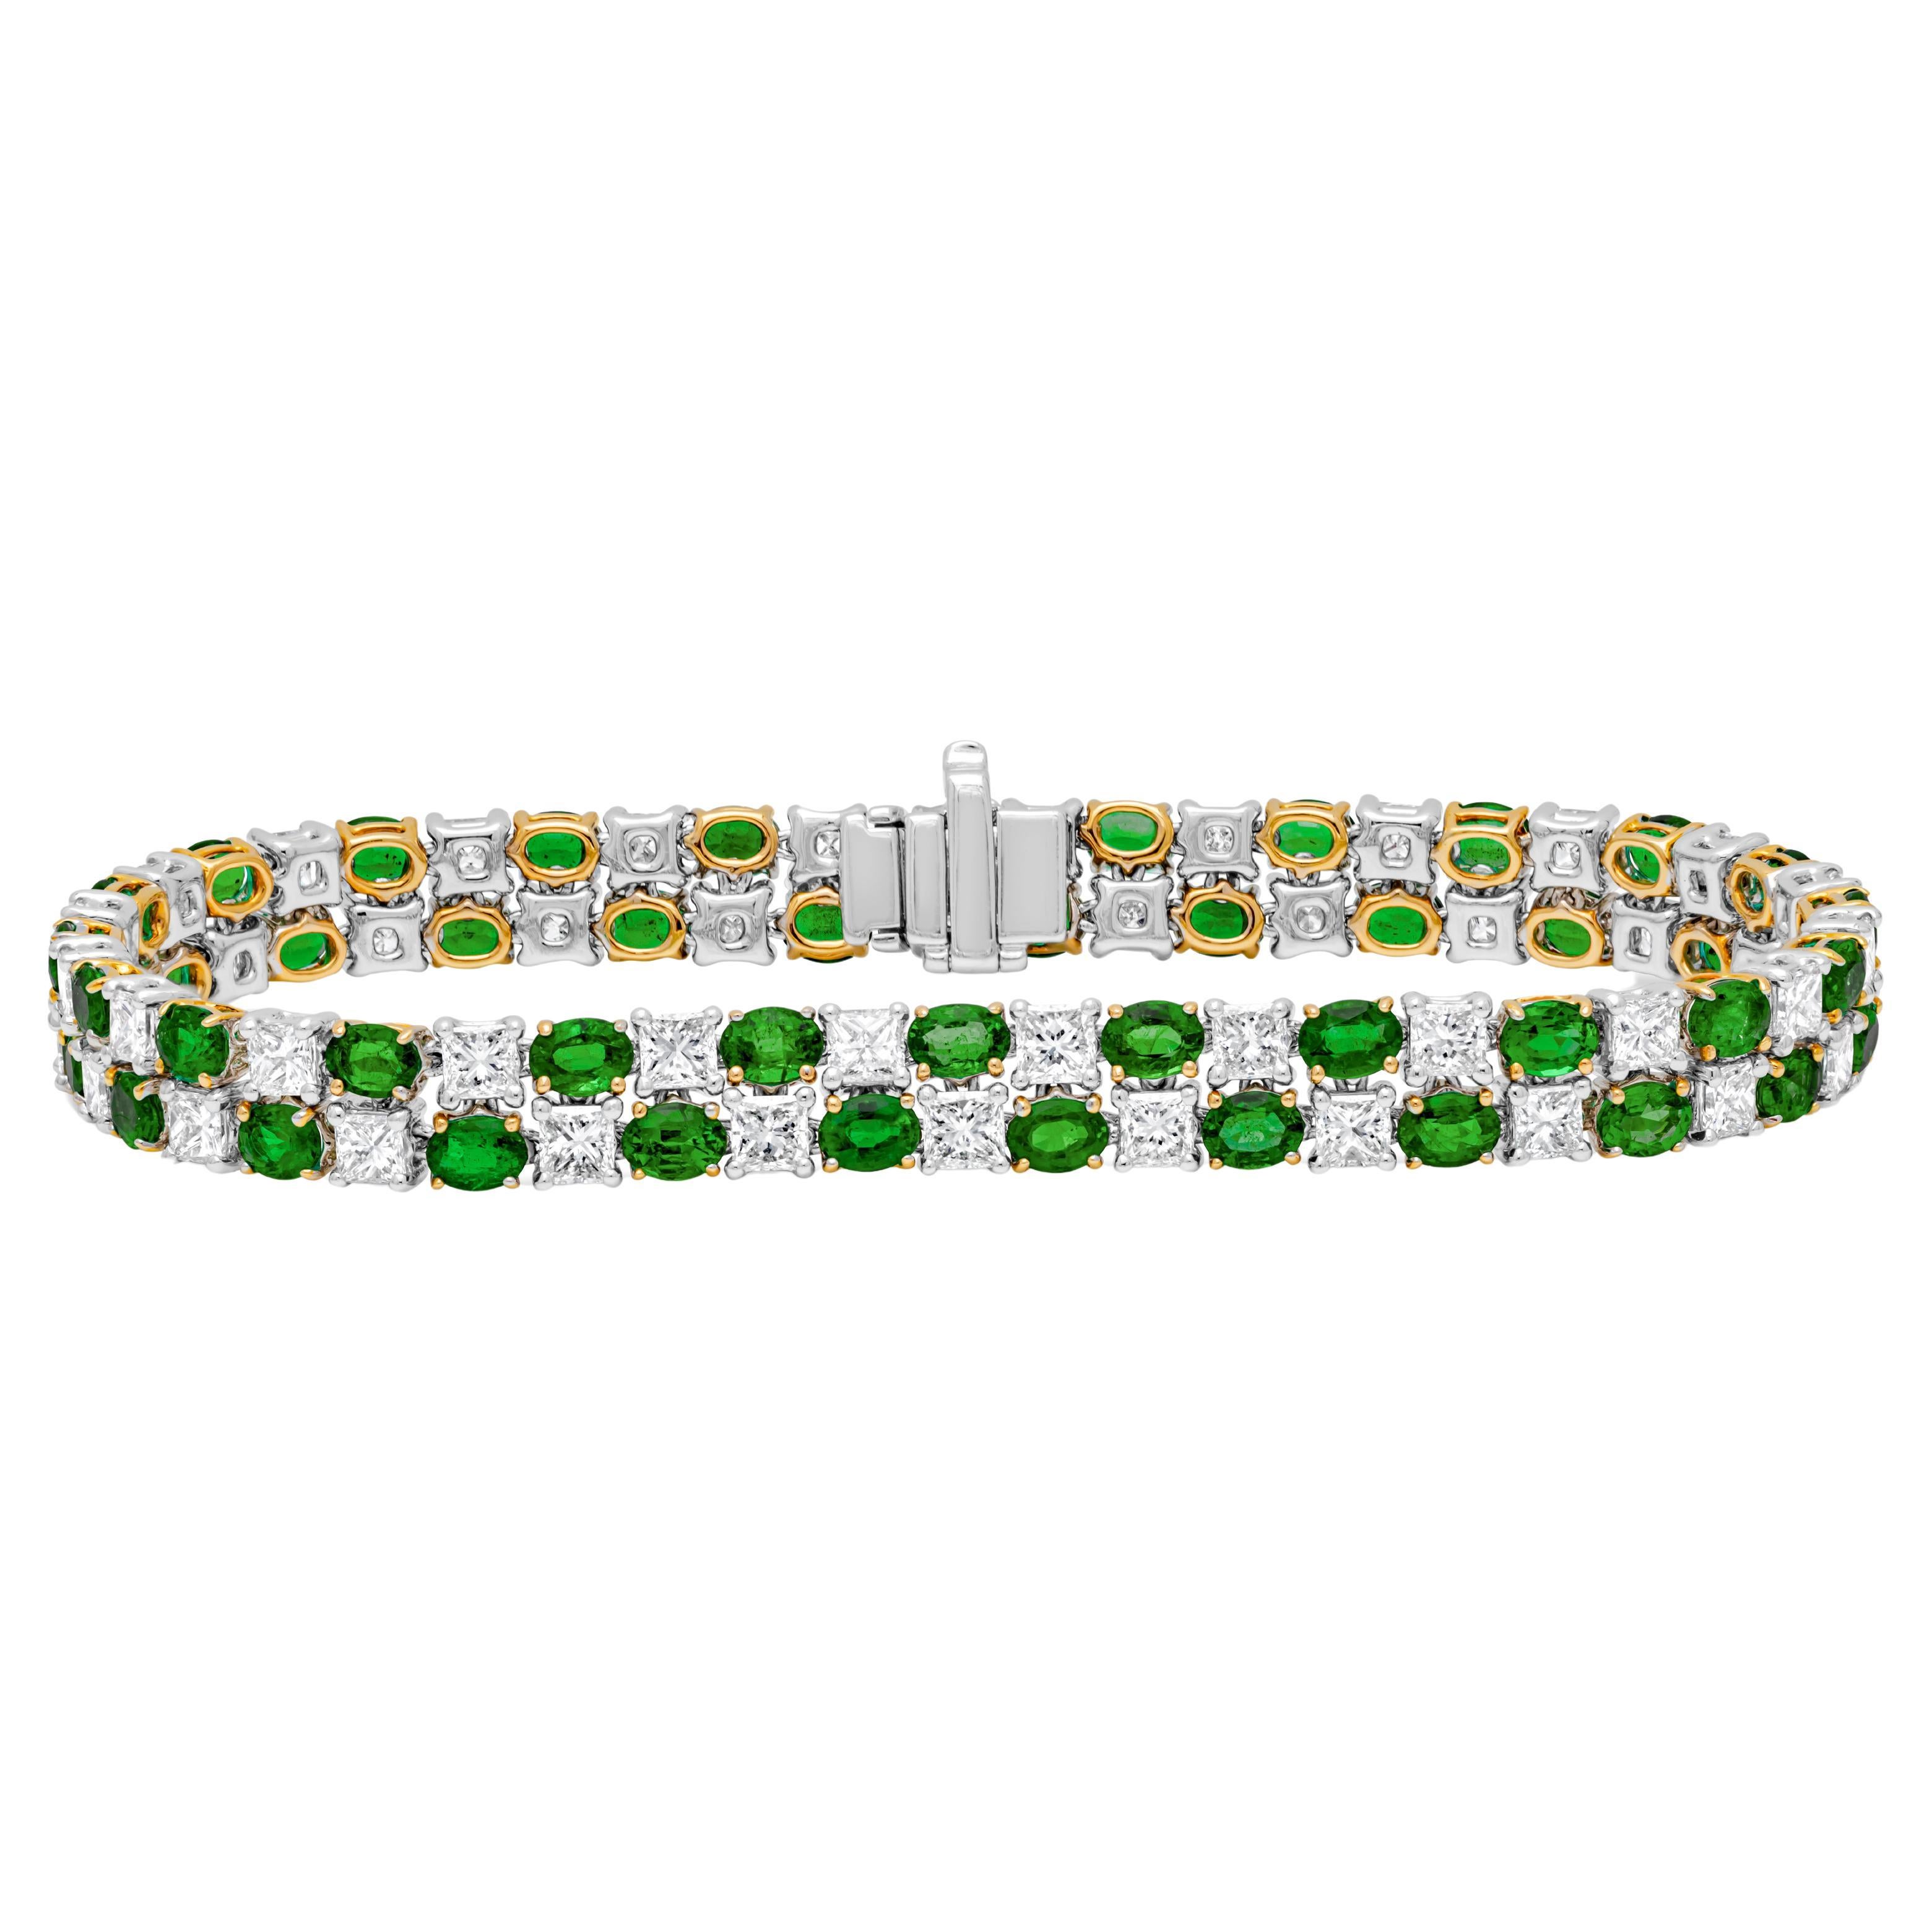 Roman Malakov 14.59 Carats Total Mixed Cut Emerald & Diamond Tennis Bracelet